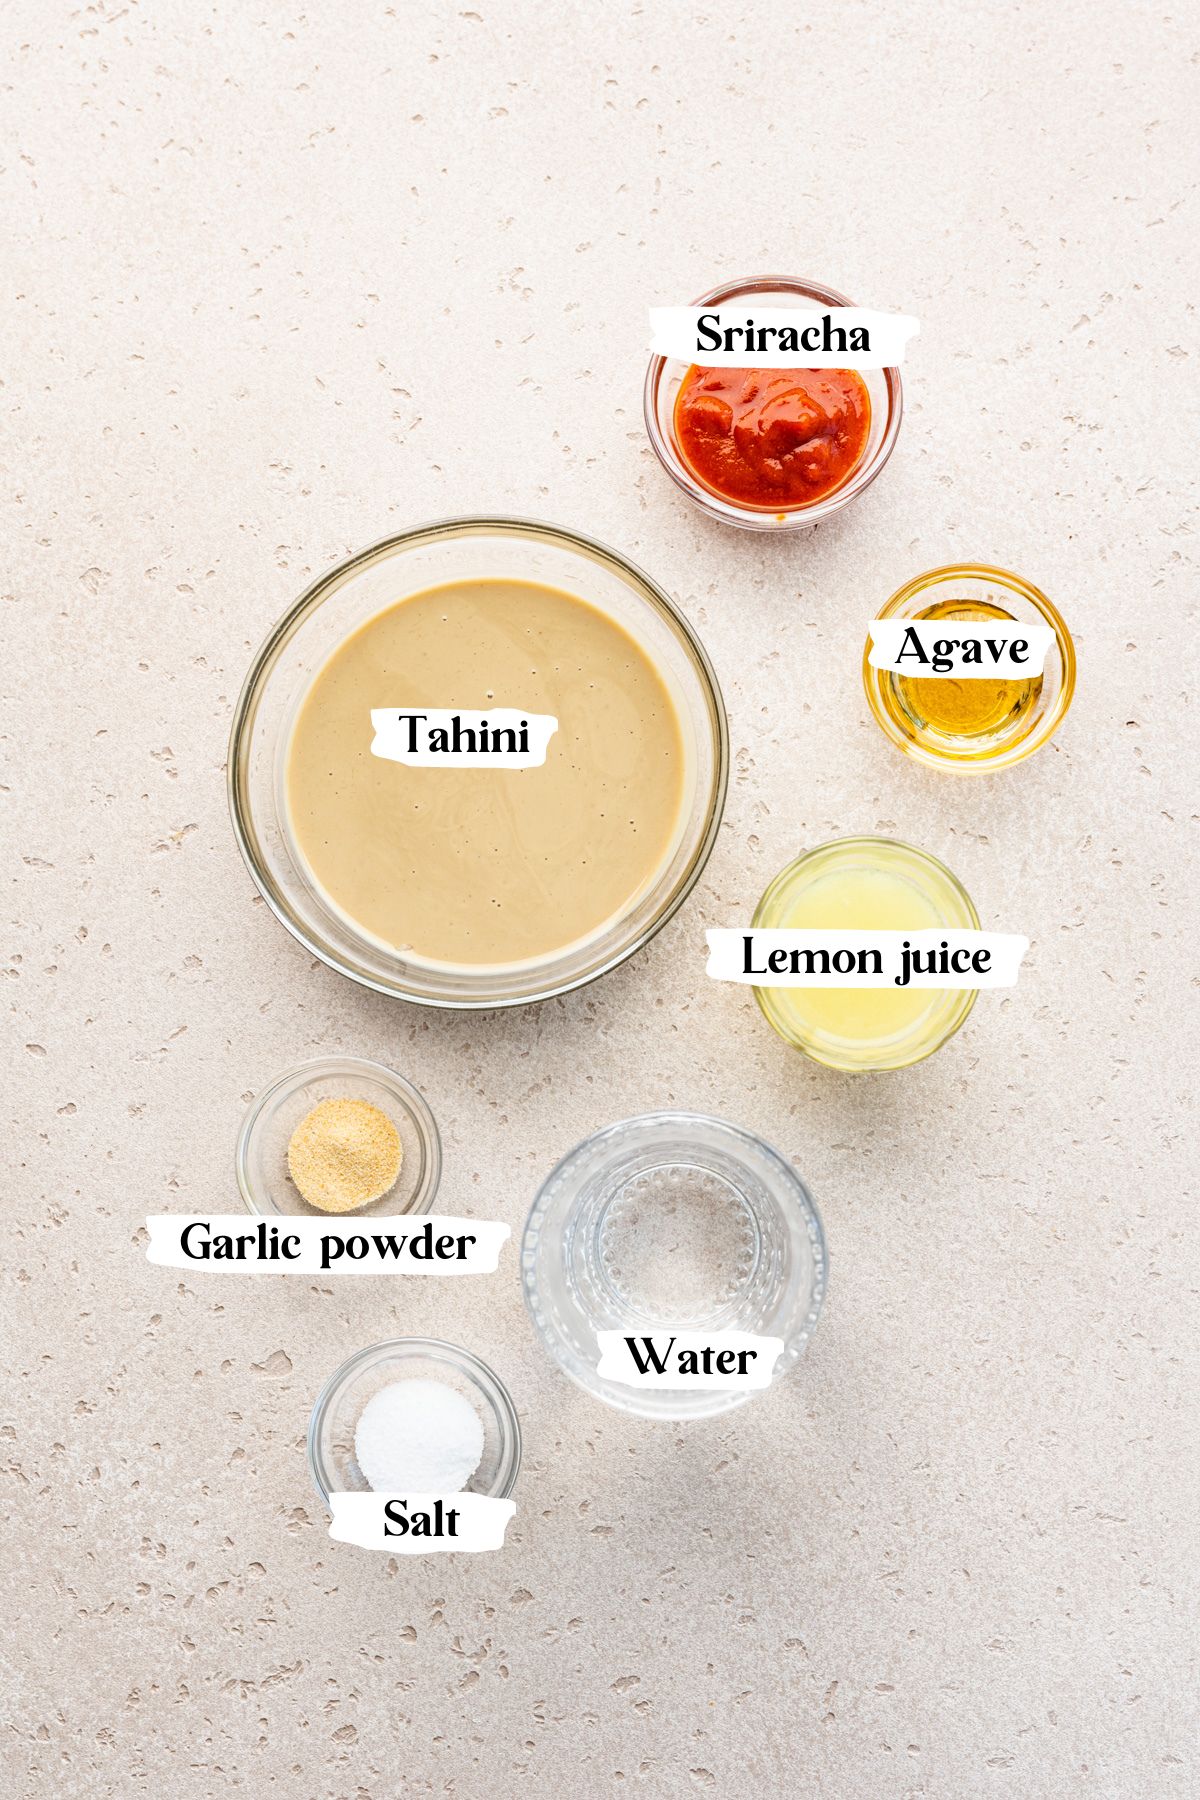 Spiced tahini ingredients including sriracha and lemon juice.